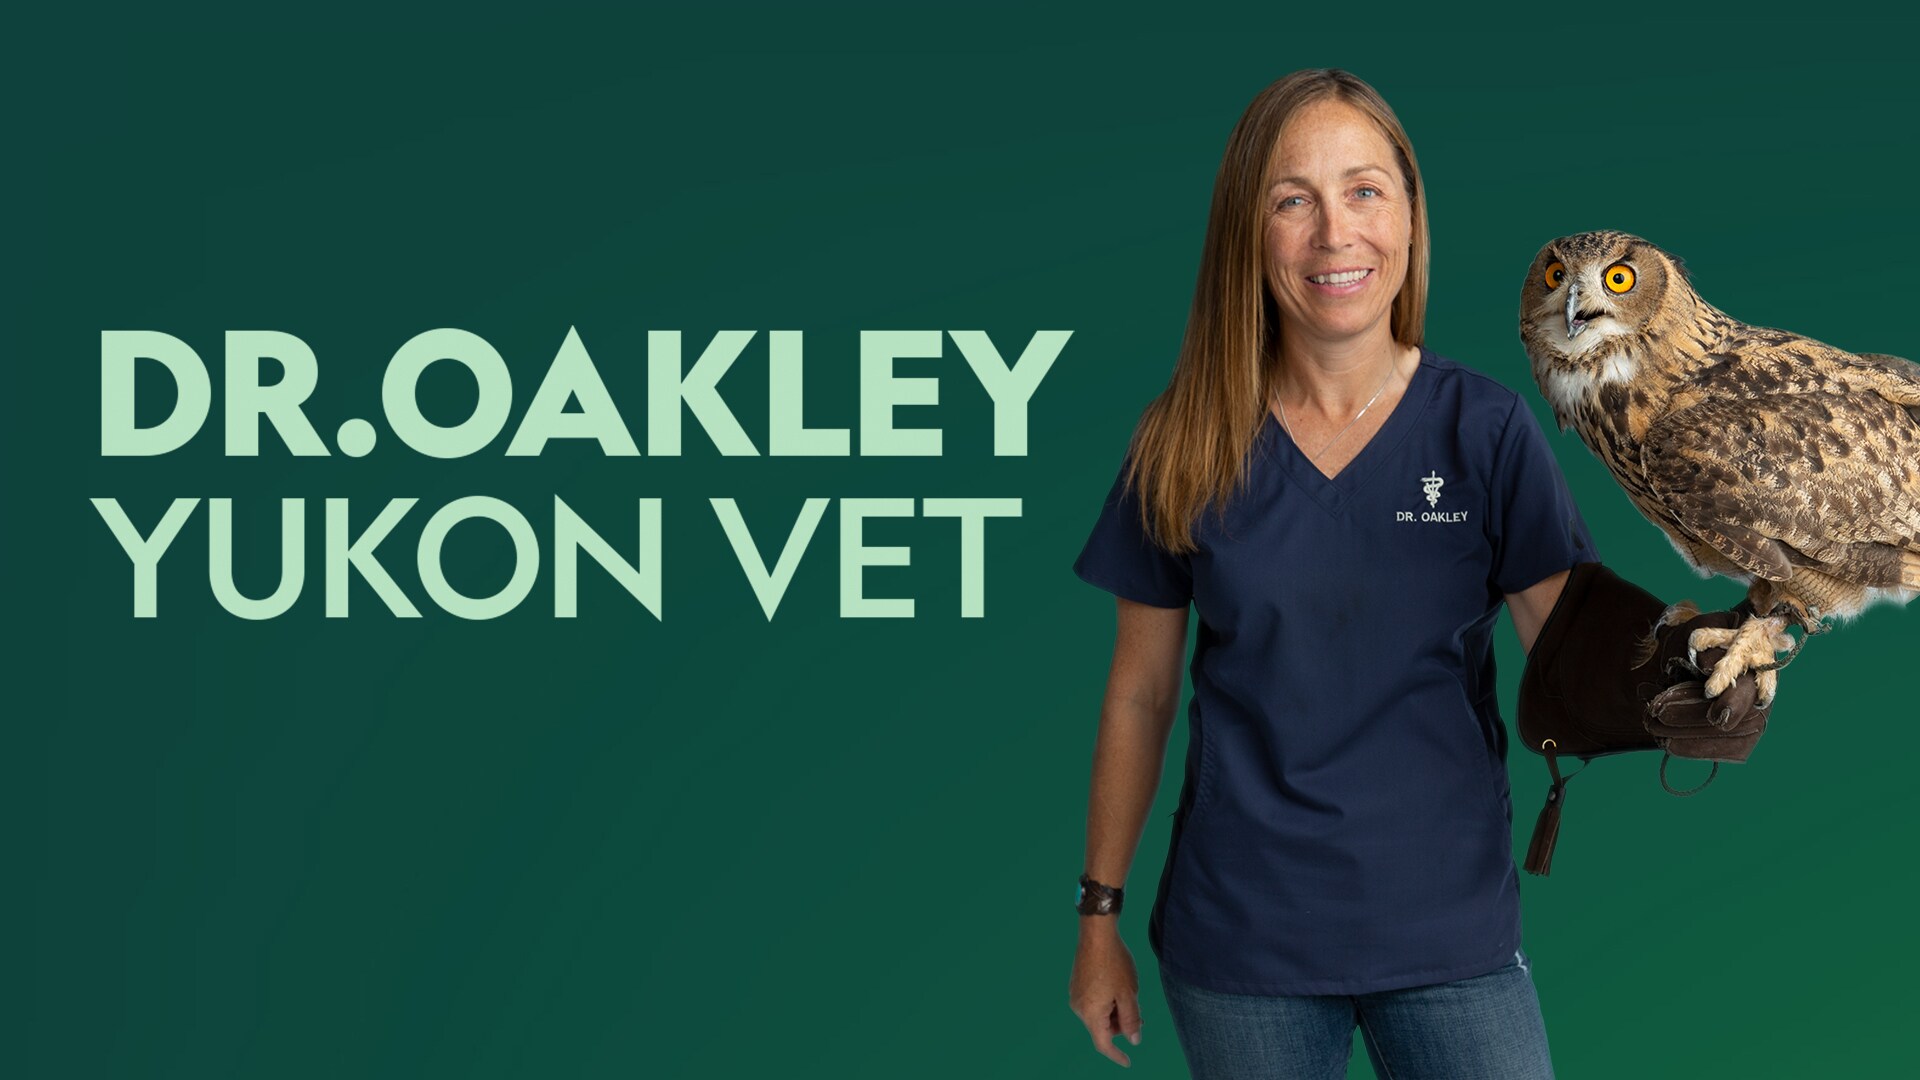 Dr. Oakley, Yukon Vet | National Geographic FYC